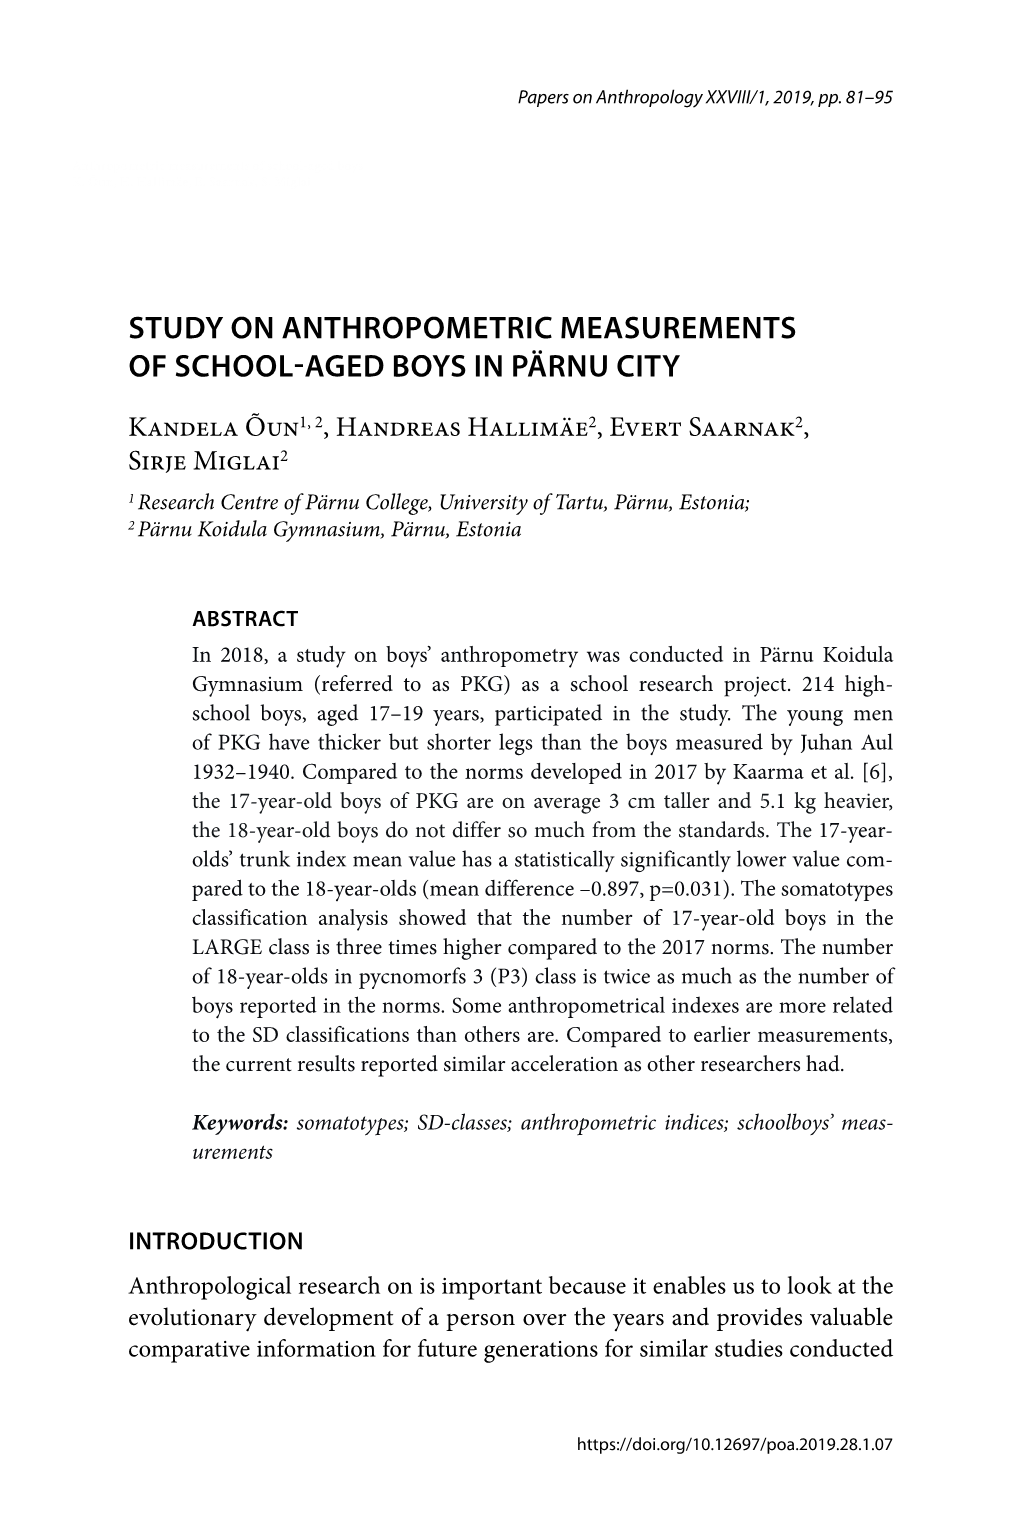 Study on Anthropometric Measurements of School-Aged Boys in Pärnu City